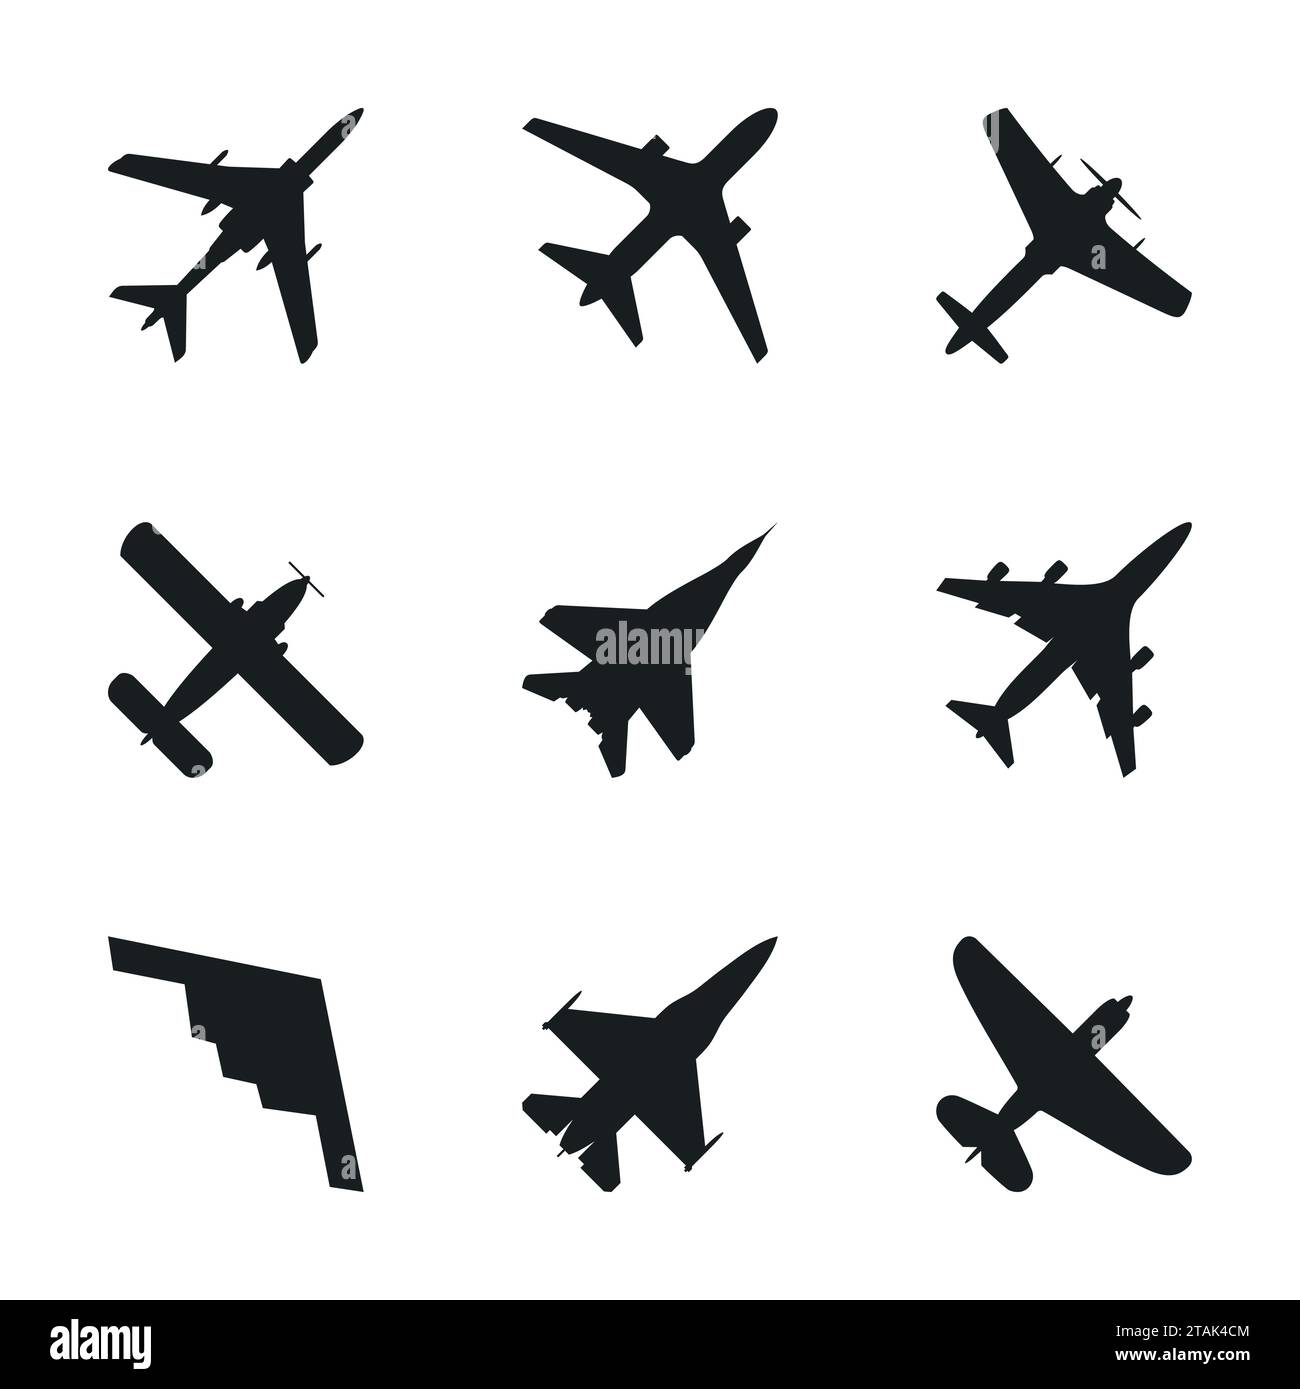 Flugzeugsymbole Set – Passagierflugzeug, Kampfflugzeug und Schraube. Vektorabbildung. Stock Vektor